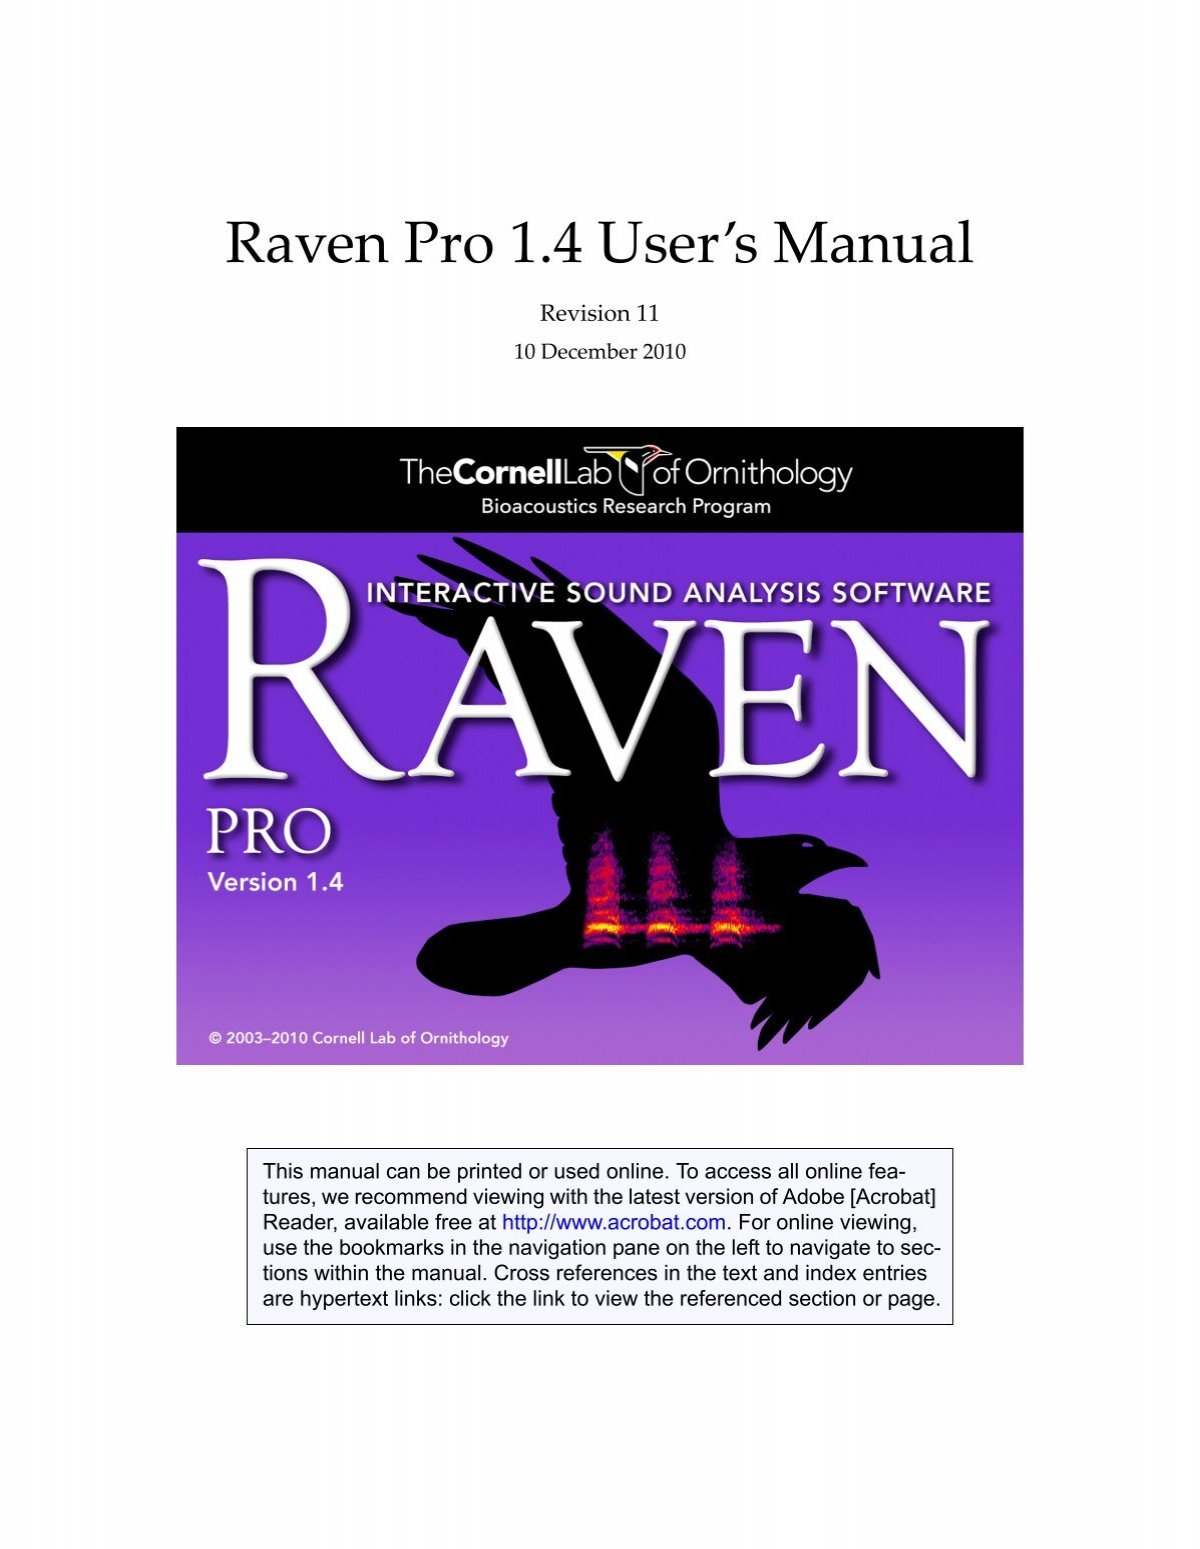 Raven Pro 1.6 – Cornell Lab of Ornithology Store